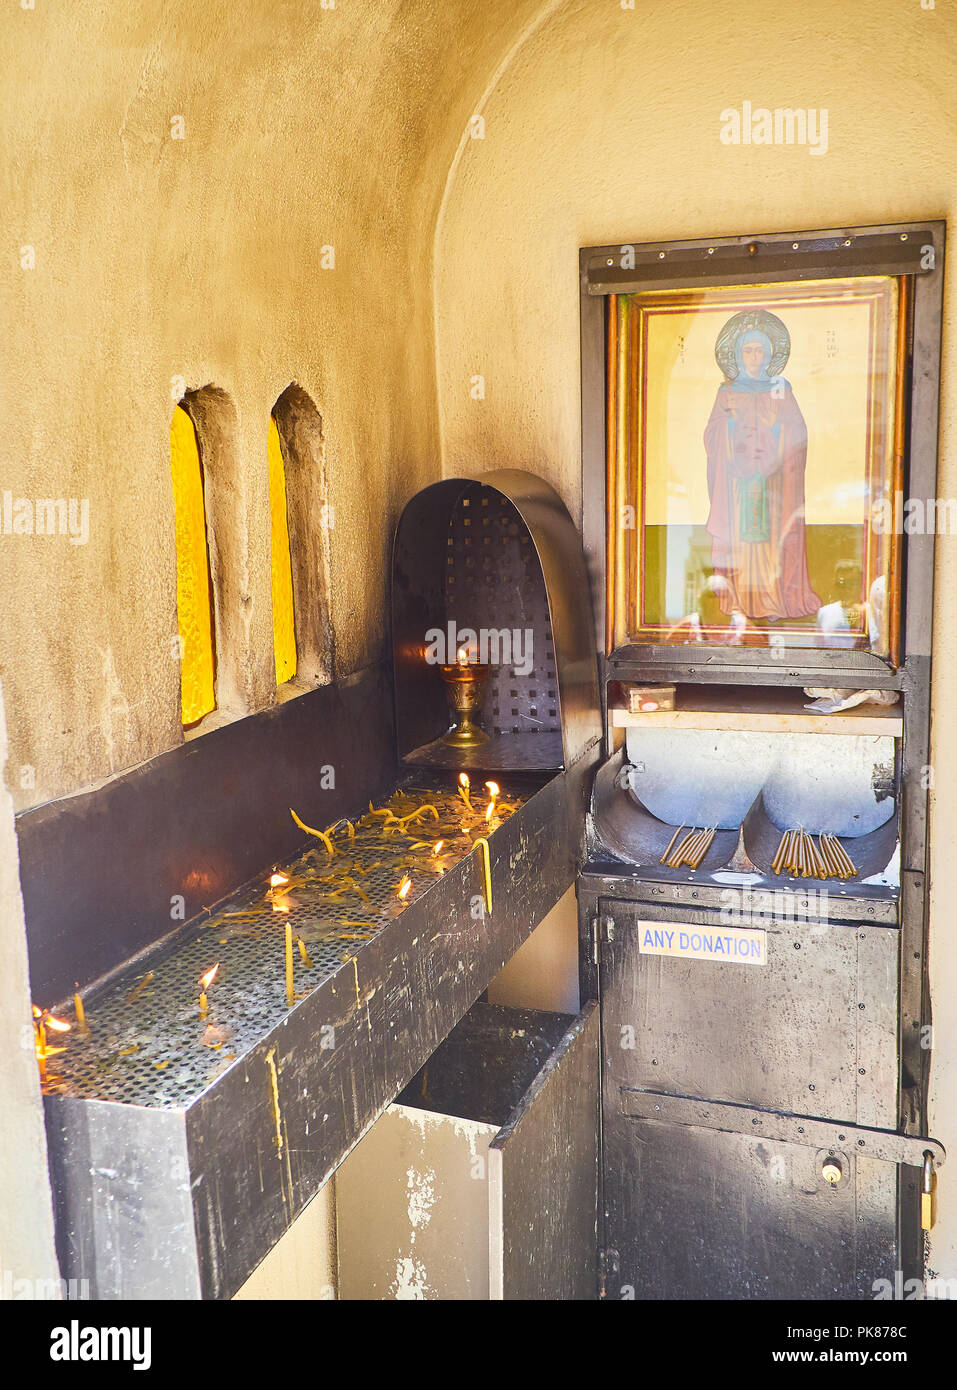 Small Greek orthodox chapel shrine at a street of Kos, South Aegean region, Greece. Stock Photo